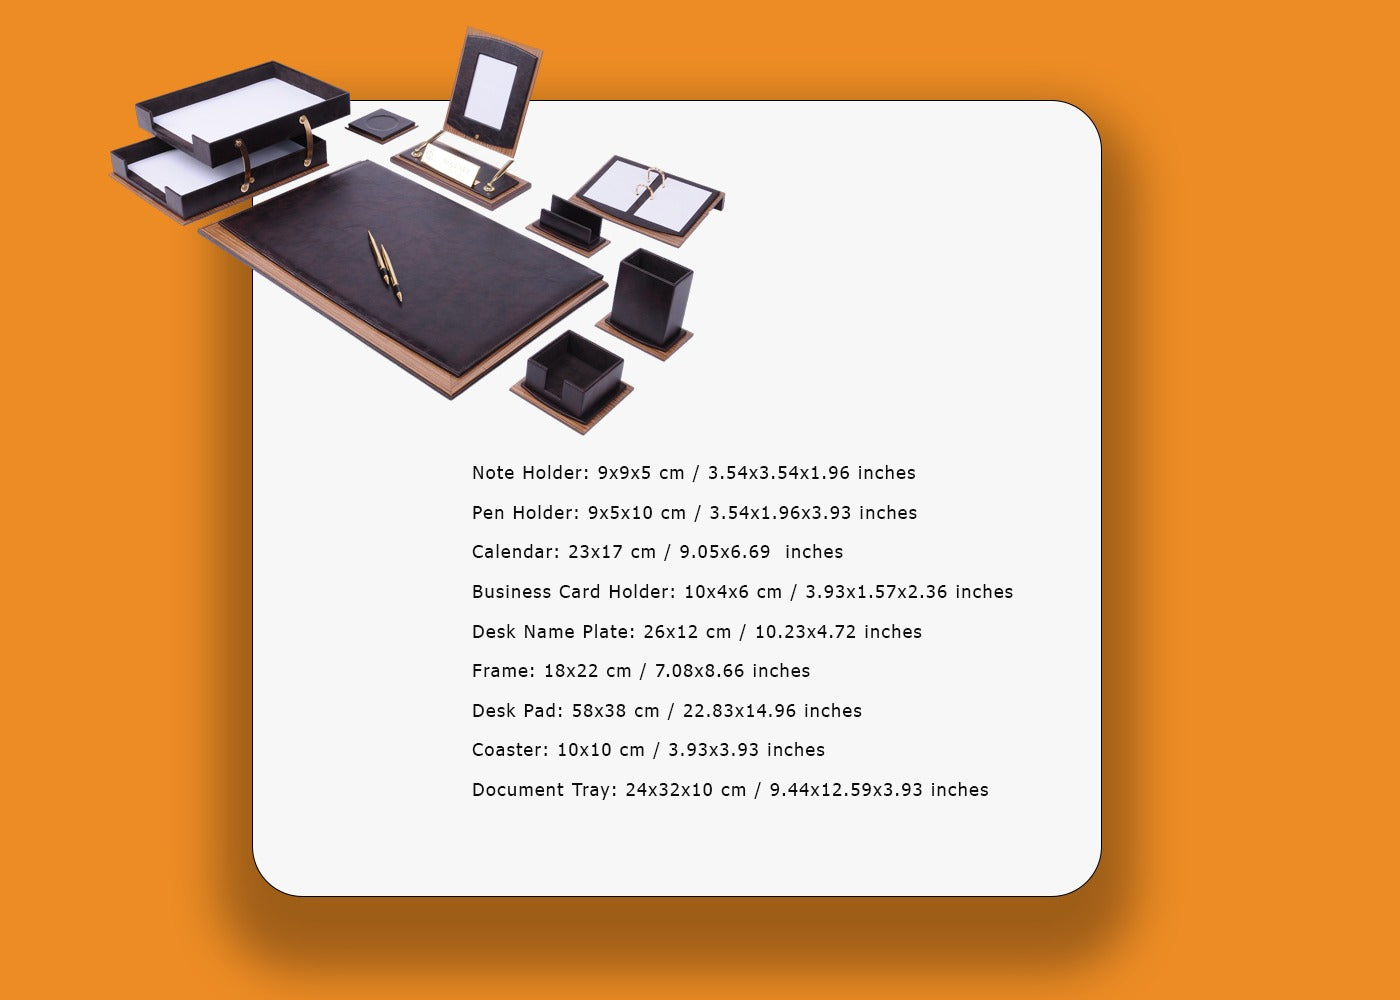 Economy Leather Desk Set (6 Piece) (Pink) – OfficeAccessoriesPlus